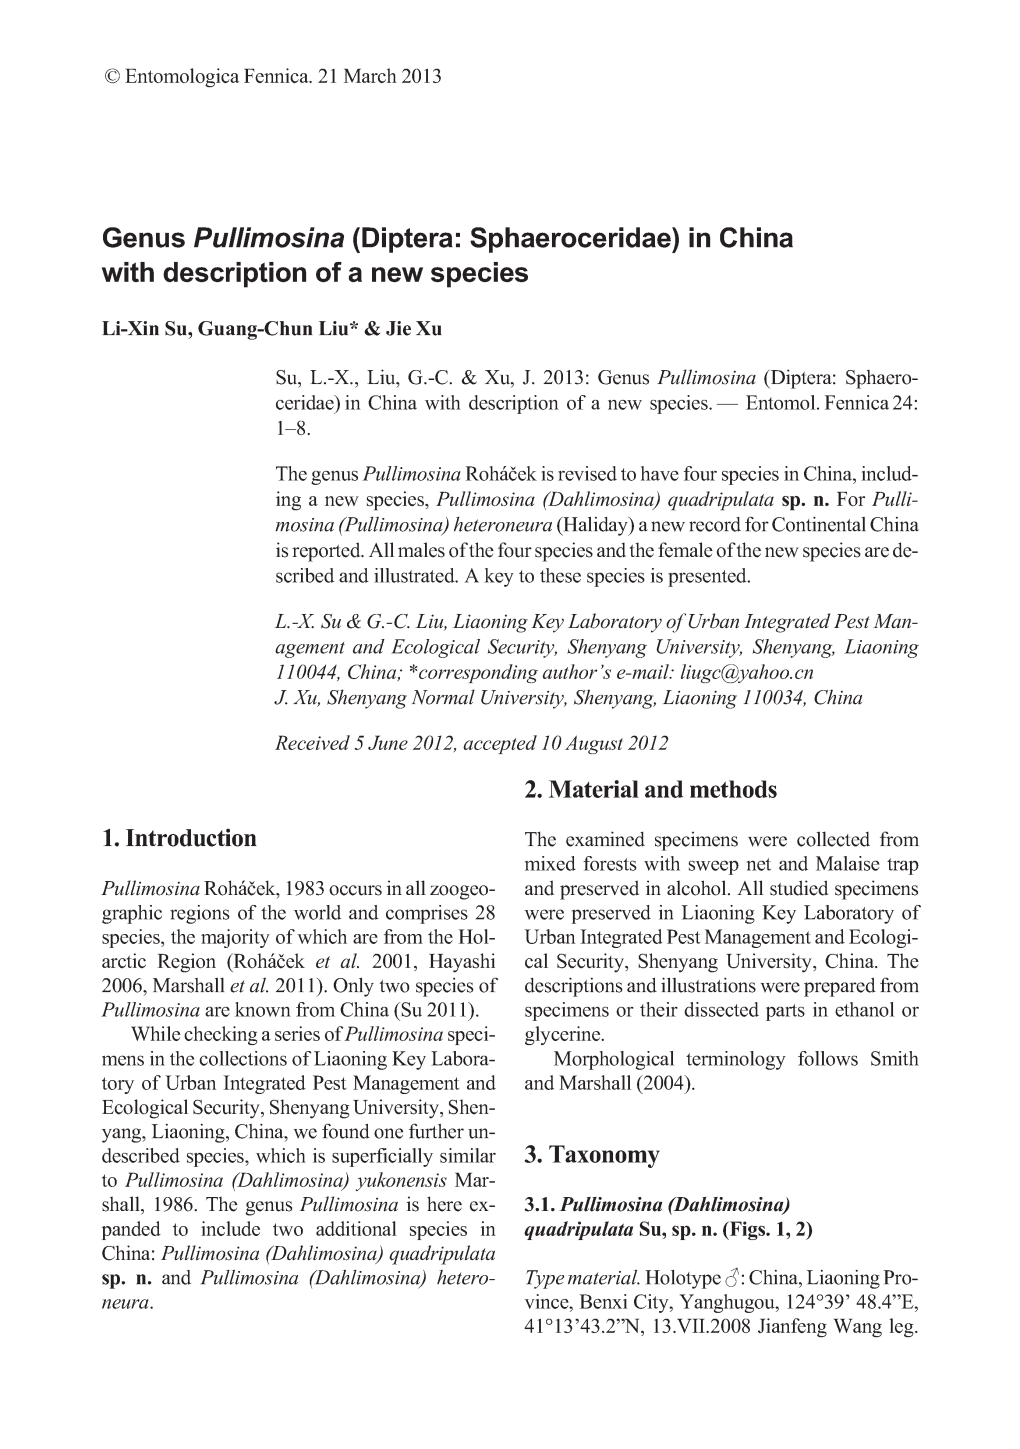 Genus Pullimosina (Diptera: Sphaeroceridae) in China with Description of a New Species